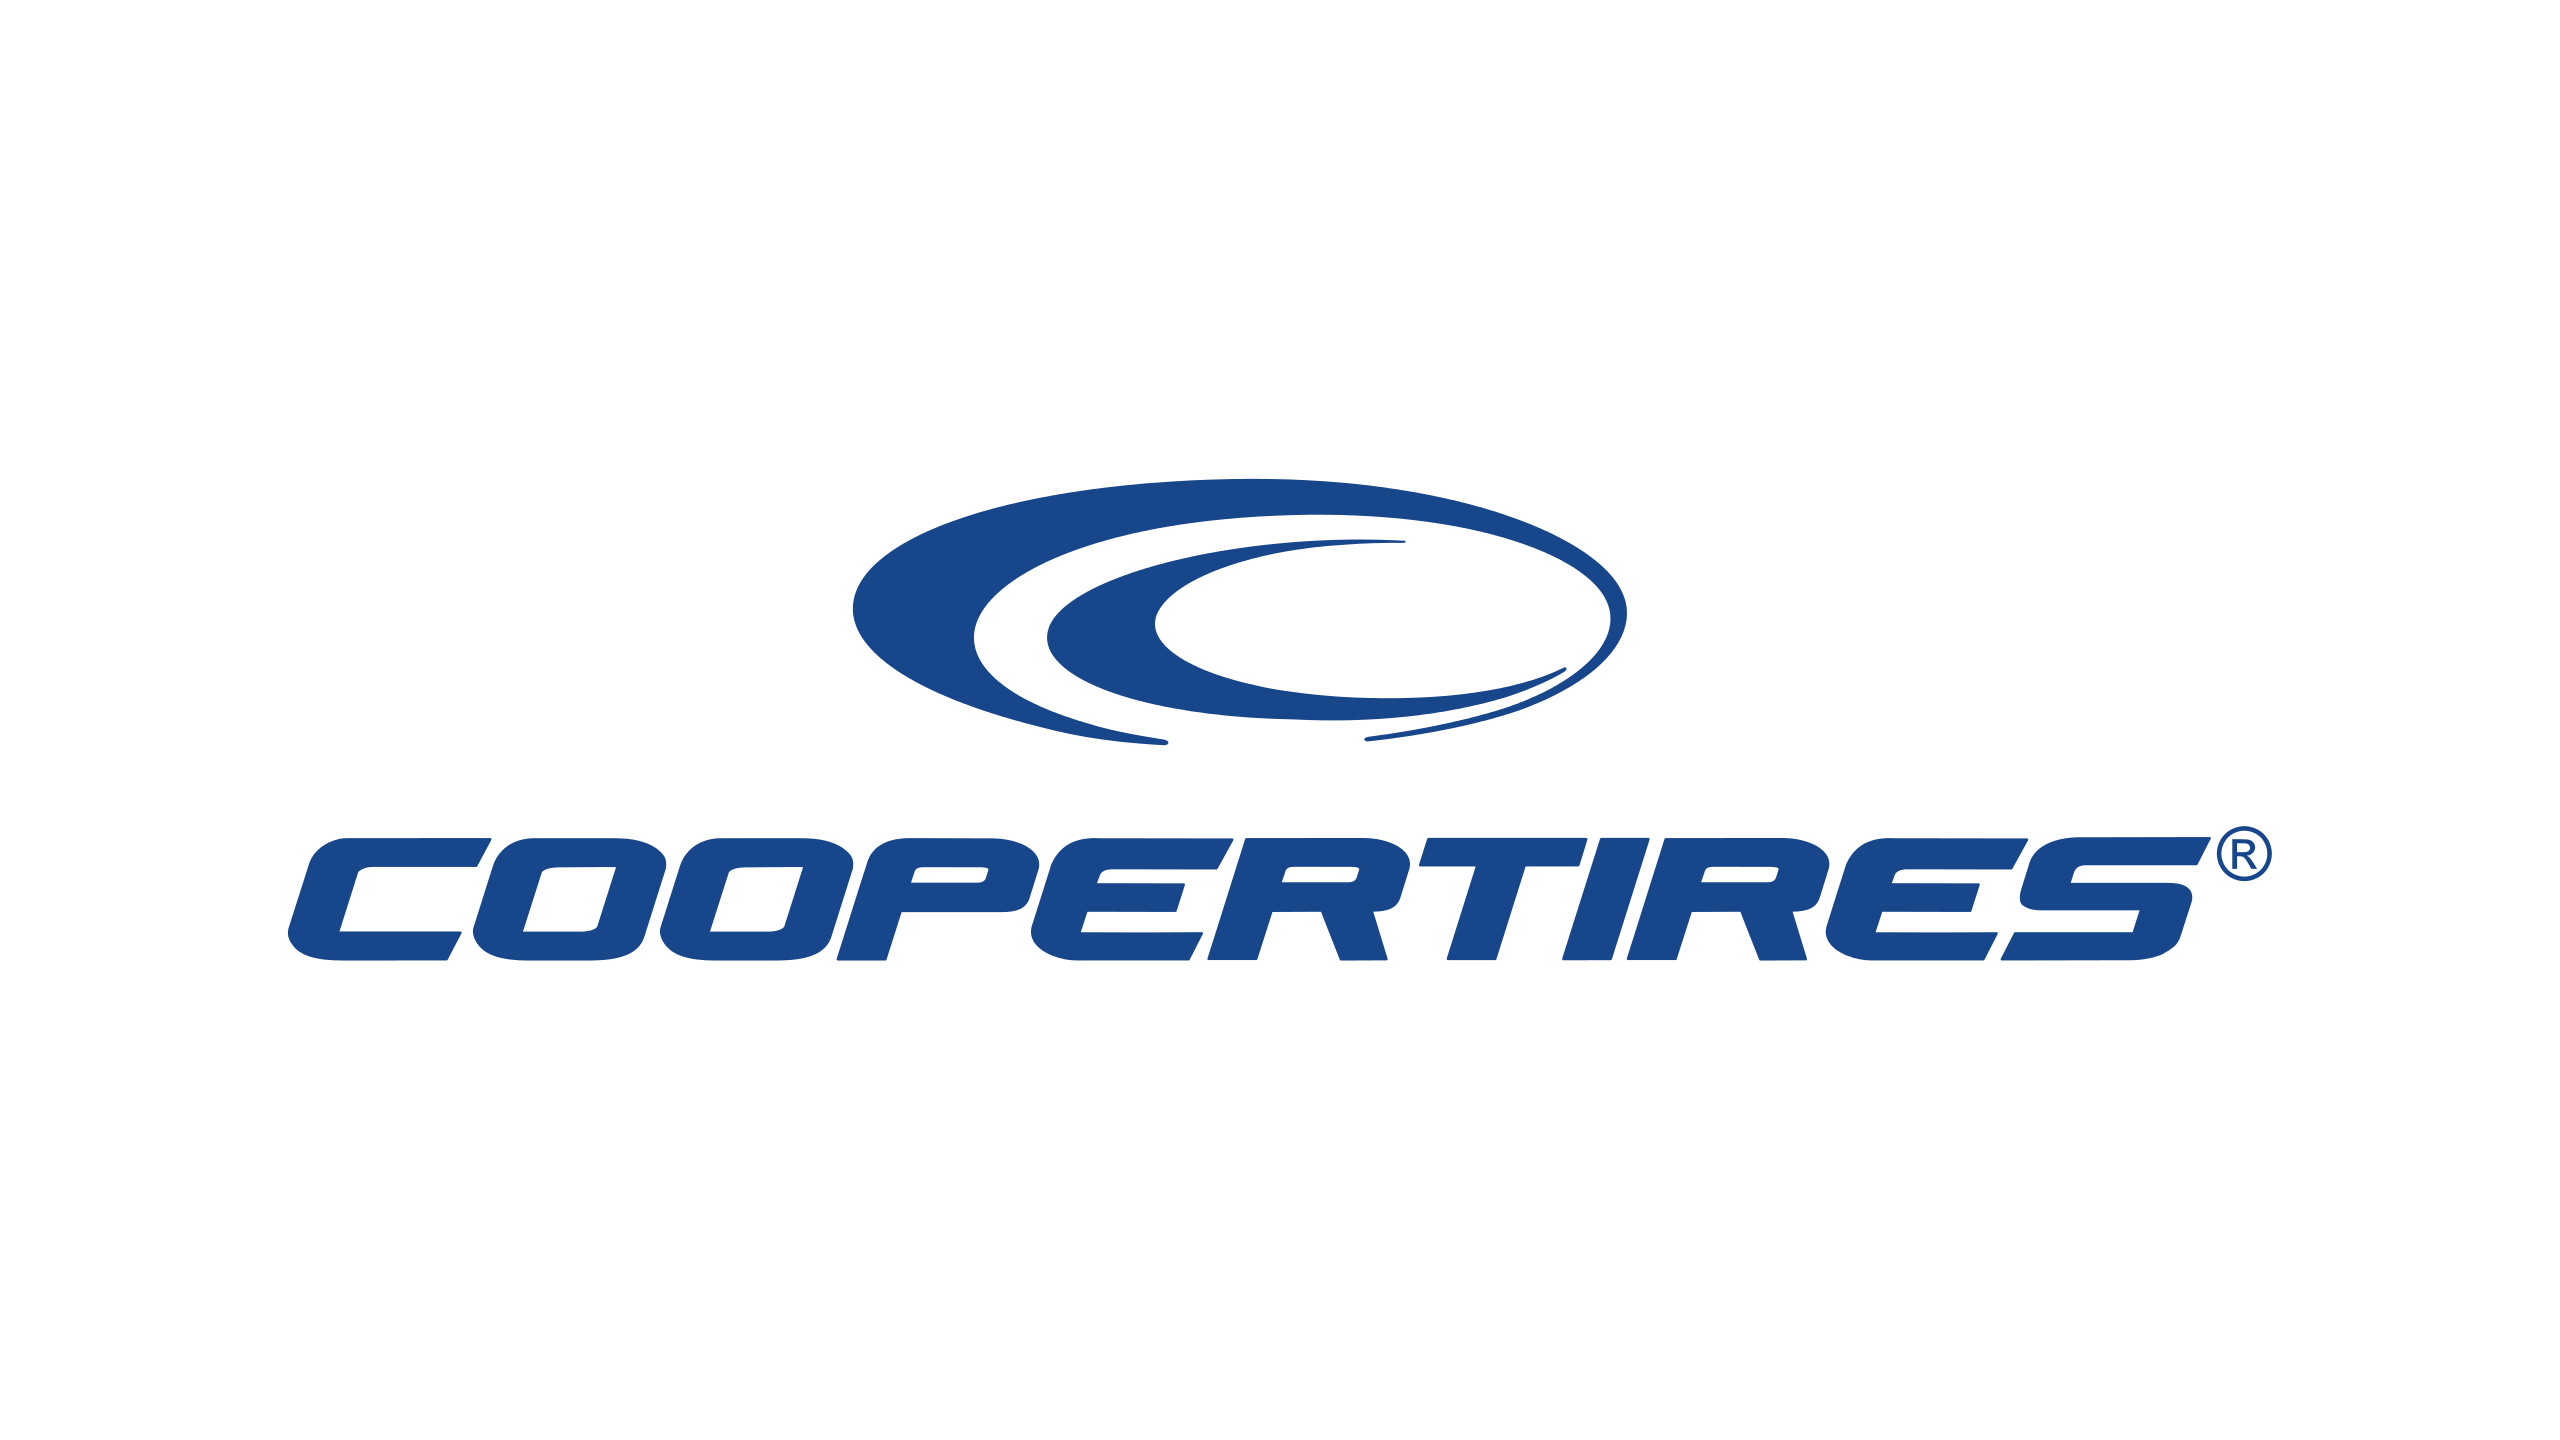 Cooper logo 2560x1440